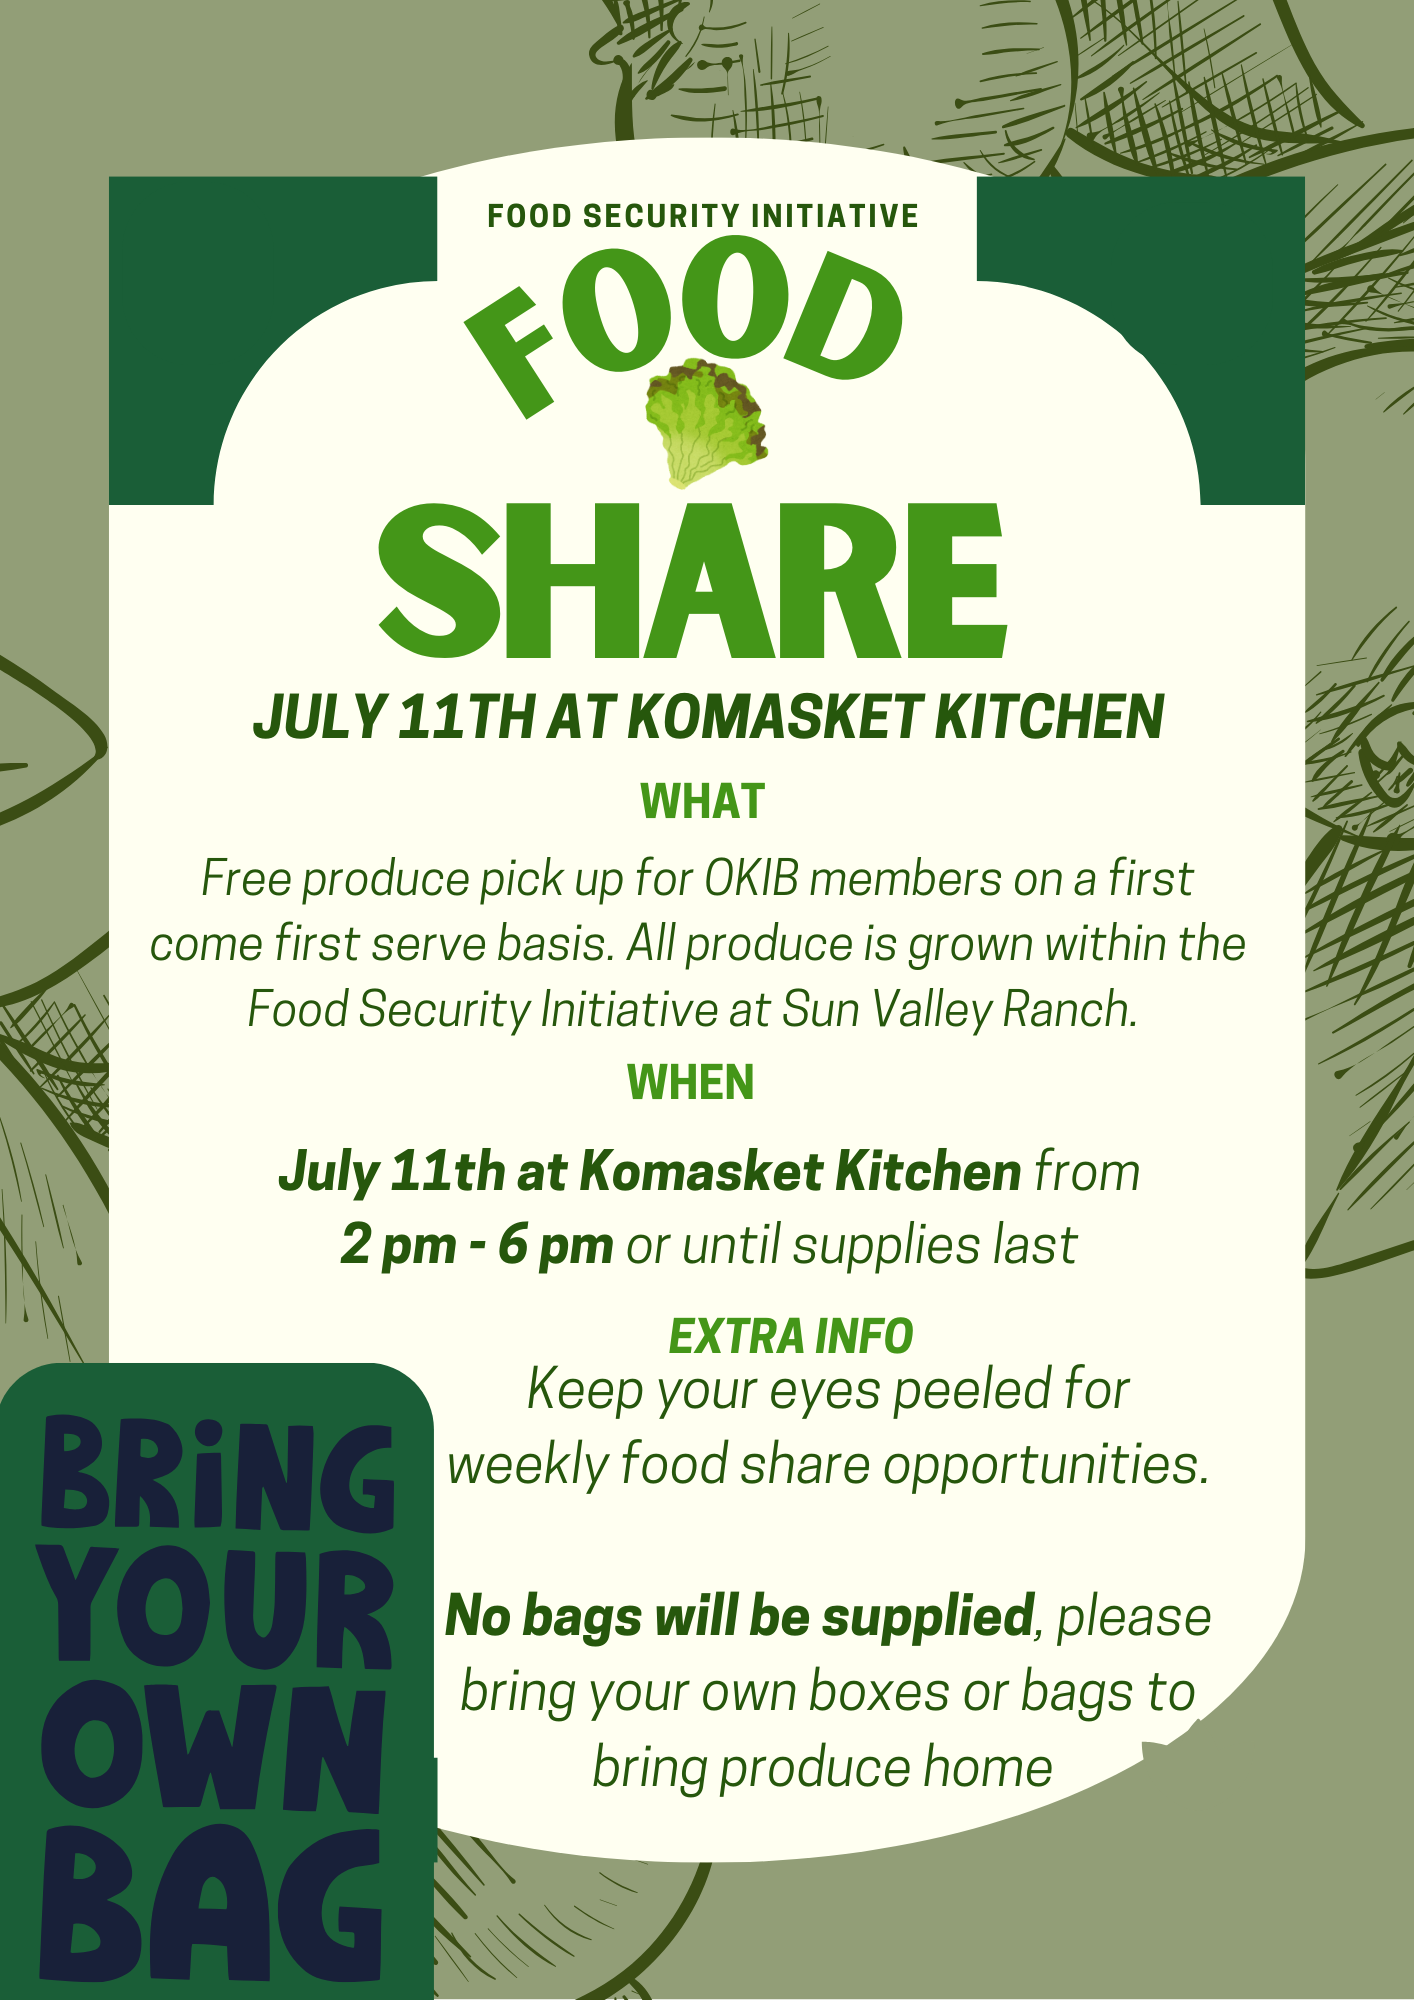 Reminder, OKIB Food Share program happening tomorrow at Komasket kitchen